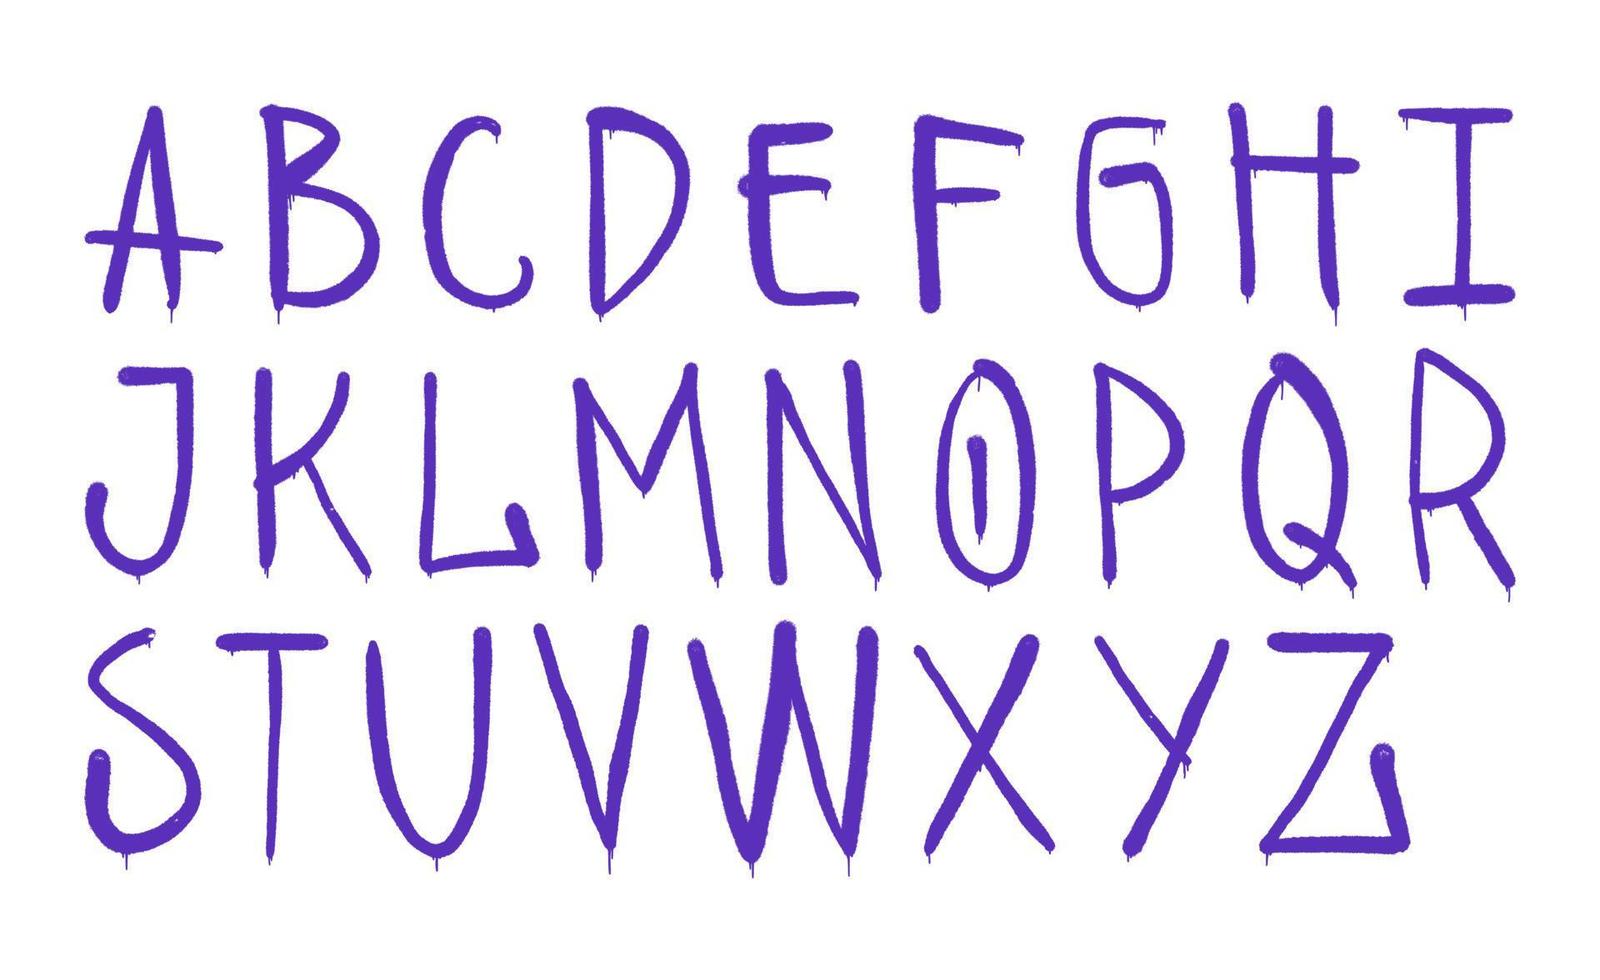 graffiti alphabet. Spray paint effect letters vector